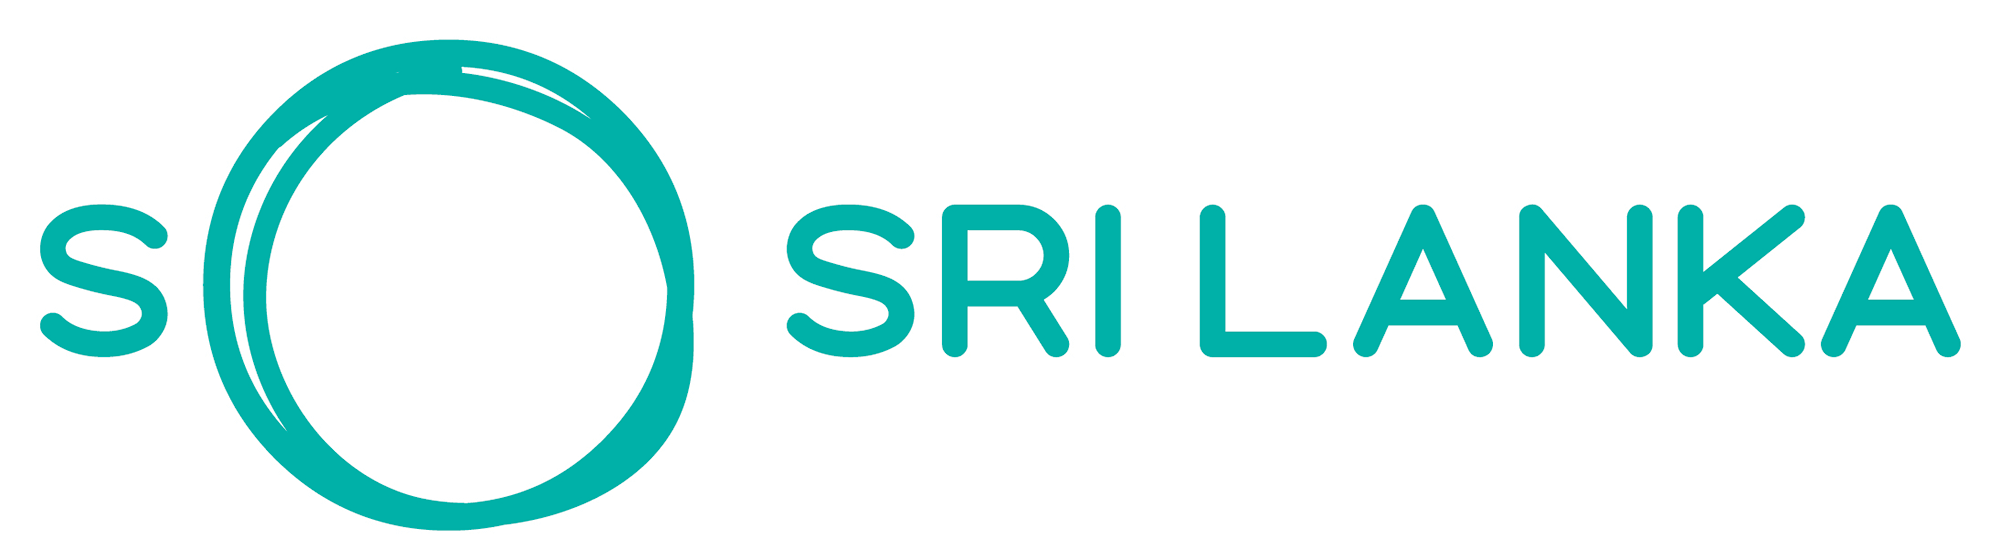 New Logo and Identity for Sri Lanka (Tourism) by Landor